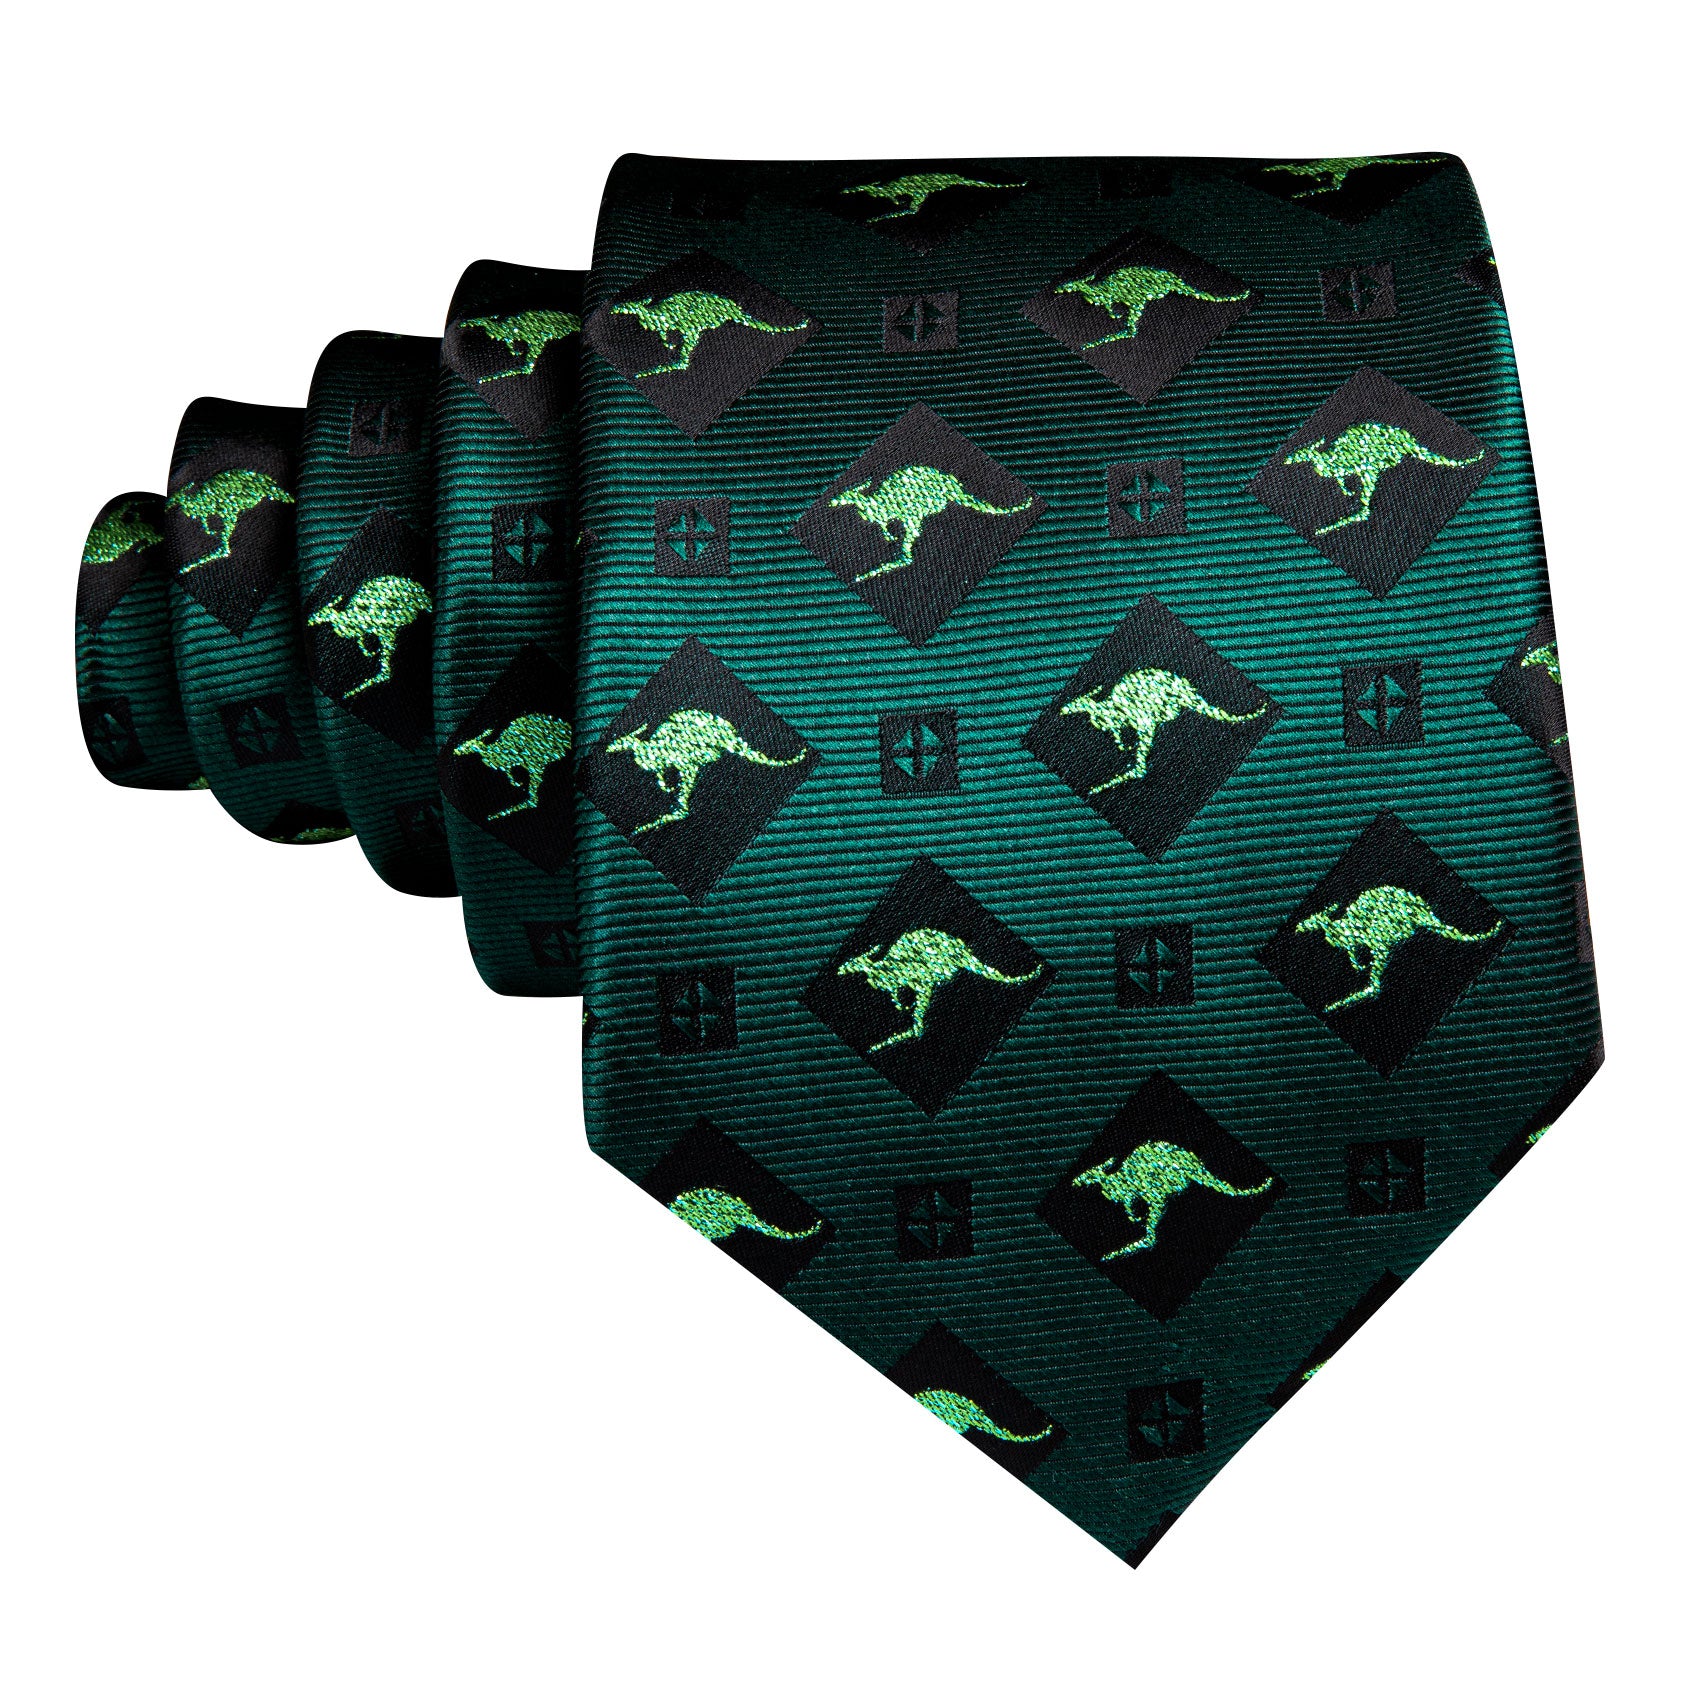 Barry.wang Green Tie Black Kangaroo Floral Silk Men's Tie Hanky Cufflinks Set